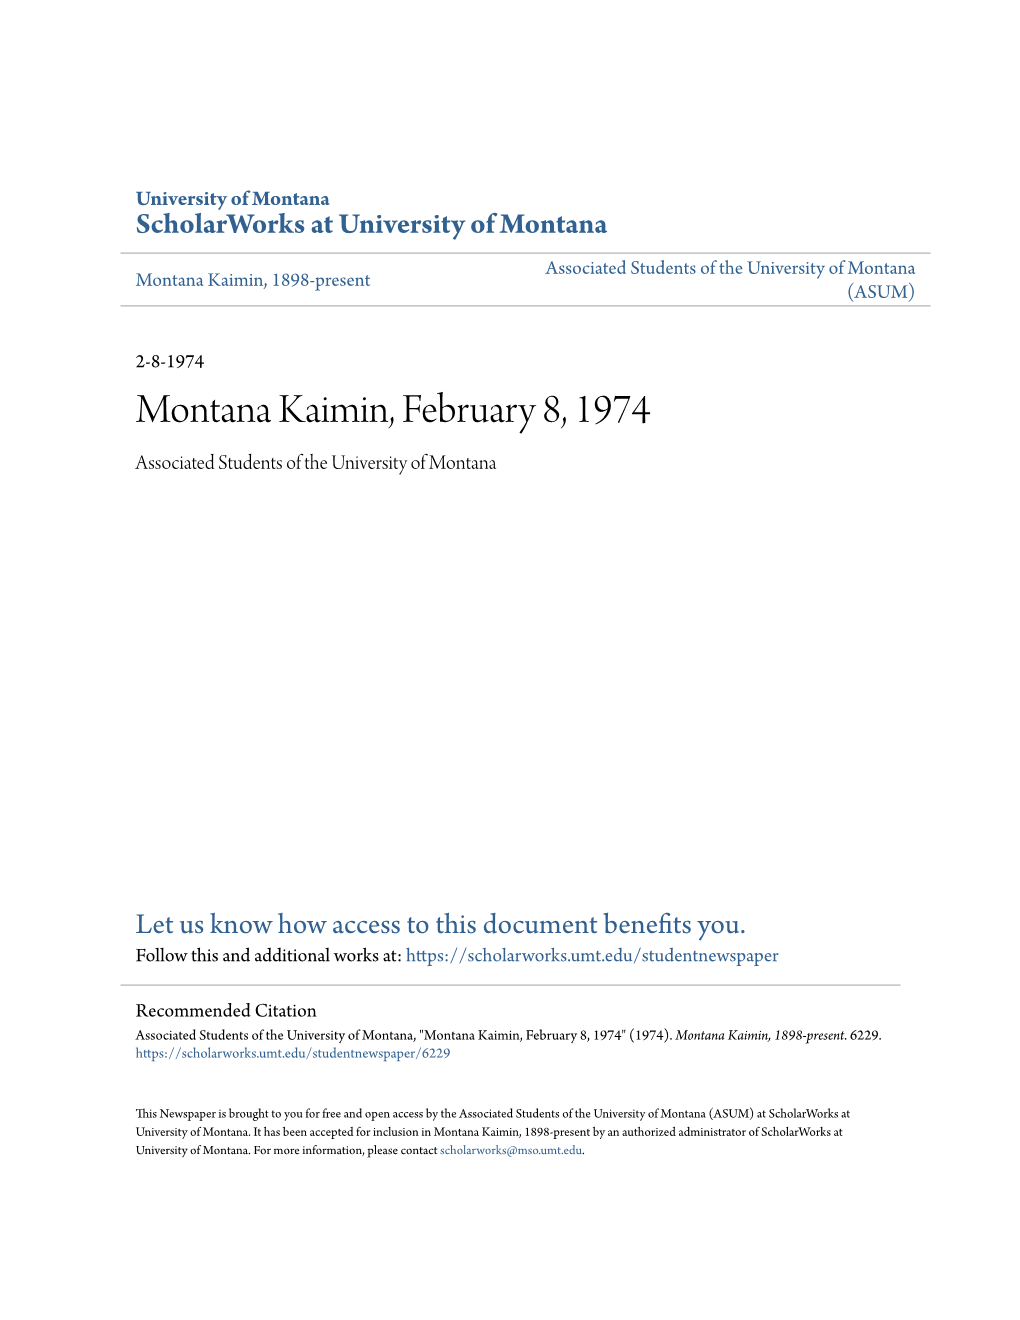 Montana Kaimin, February 8, 1974 Associated Students of the University of Montana